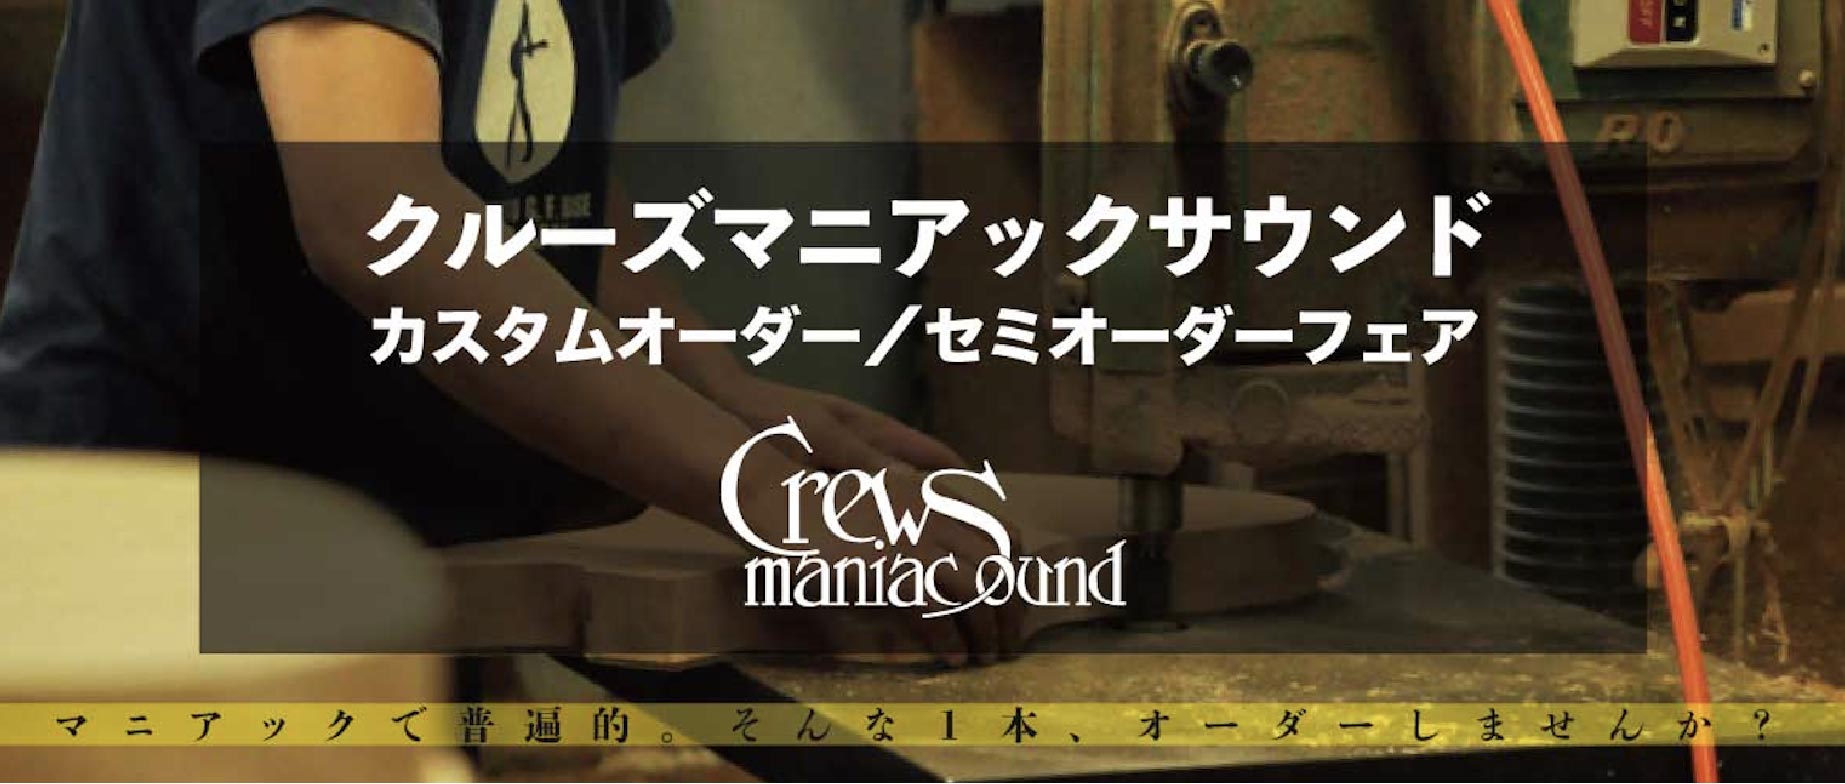 Crews Maniac Sound カスタムオーダーフェア2022